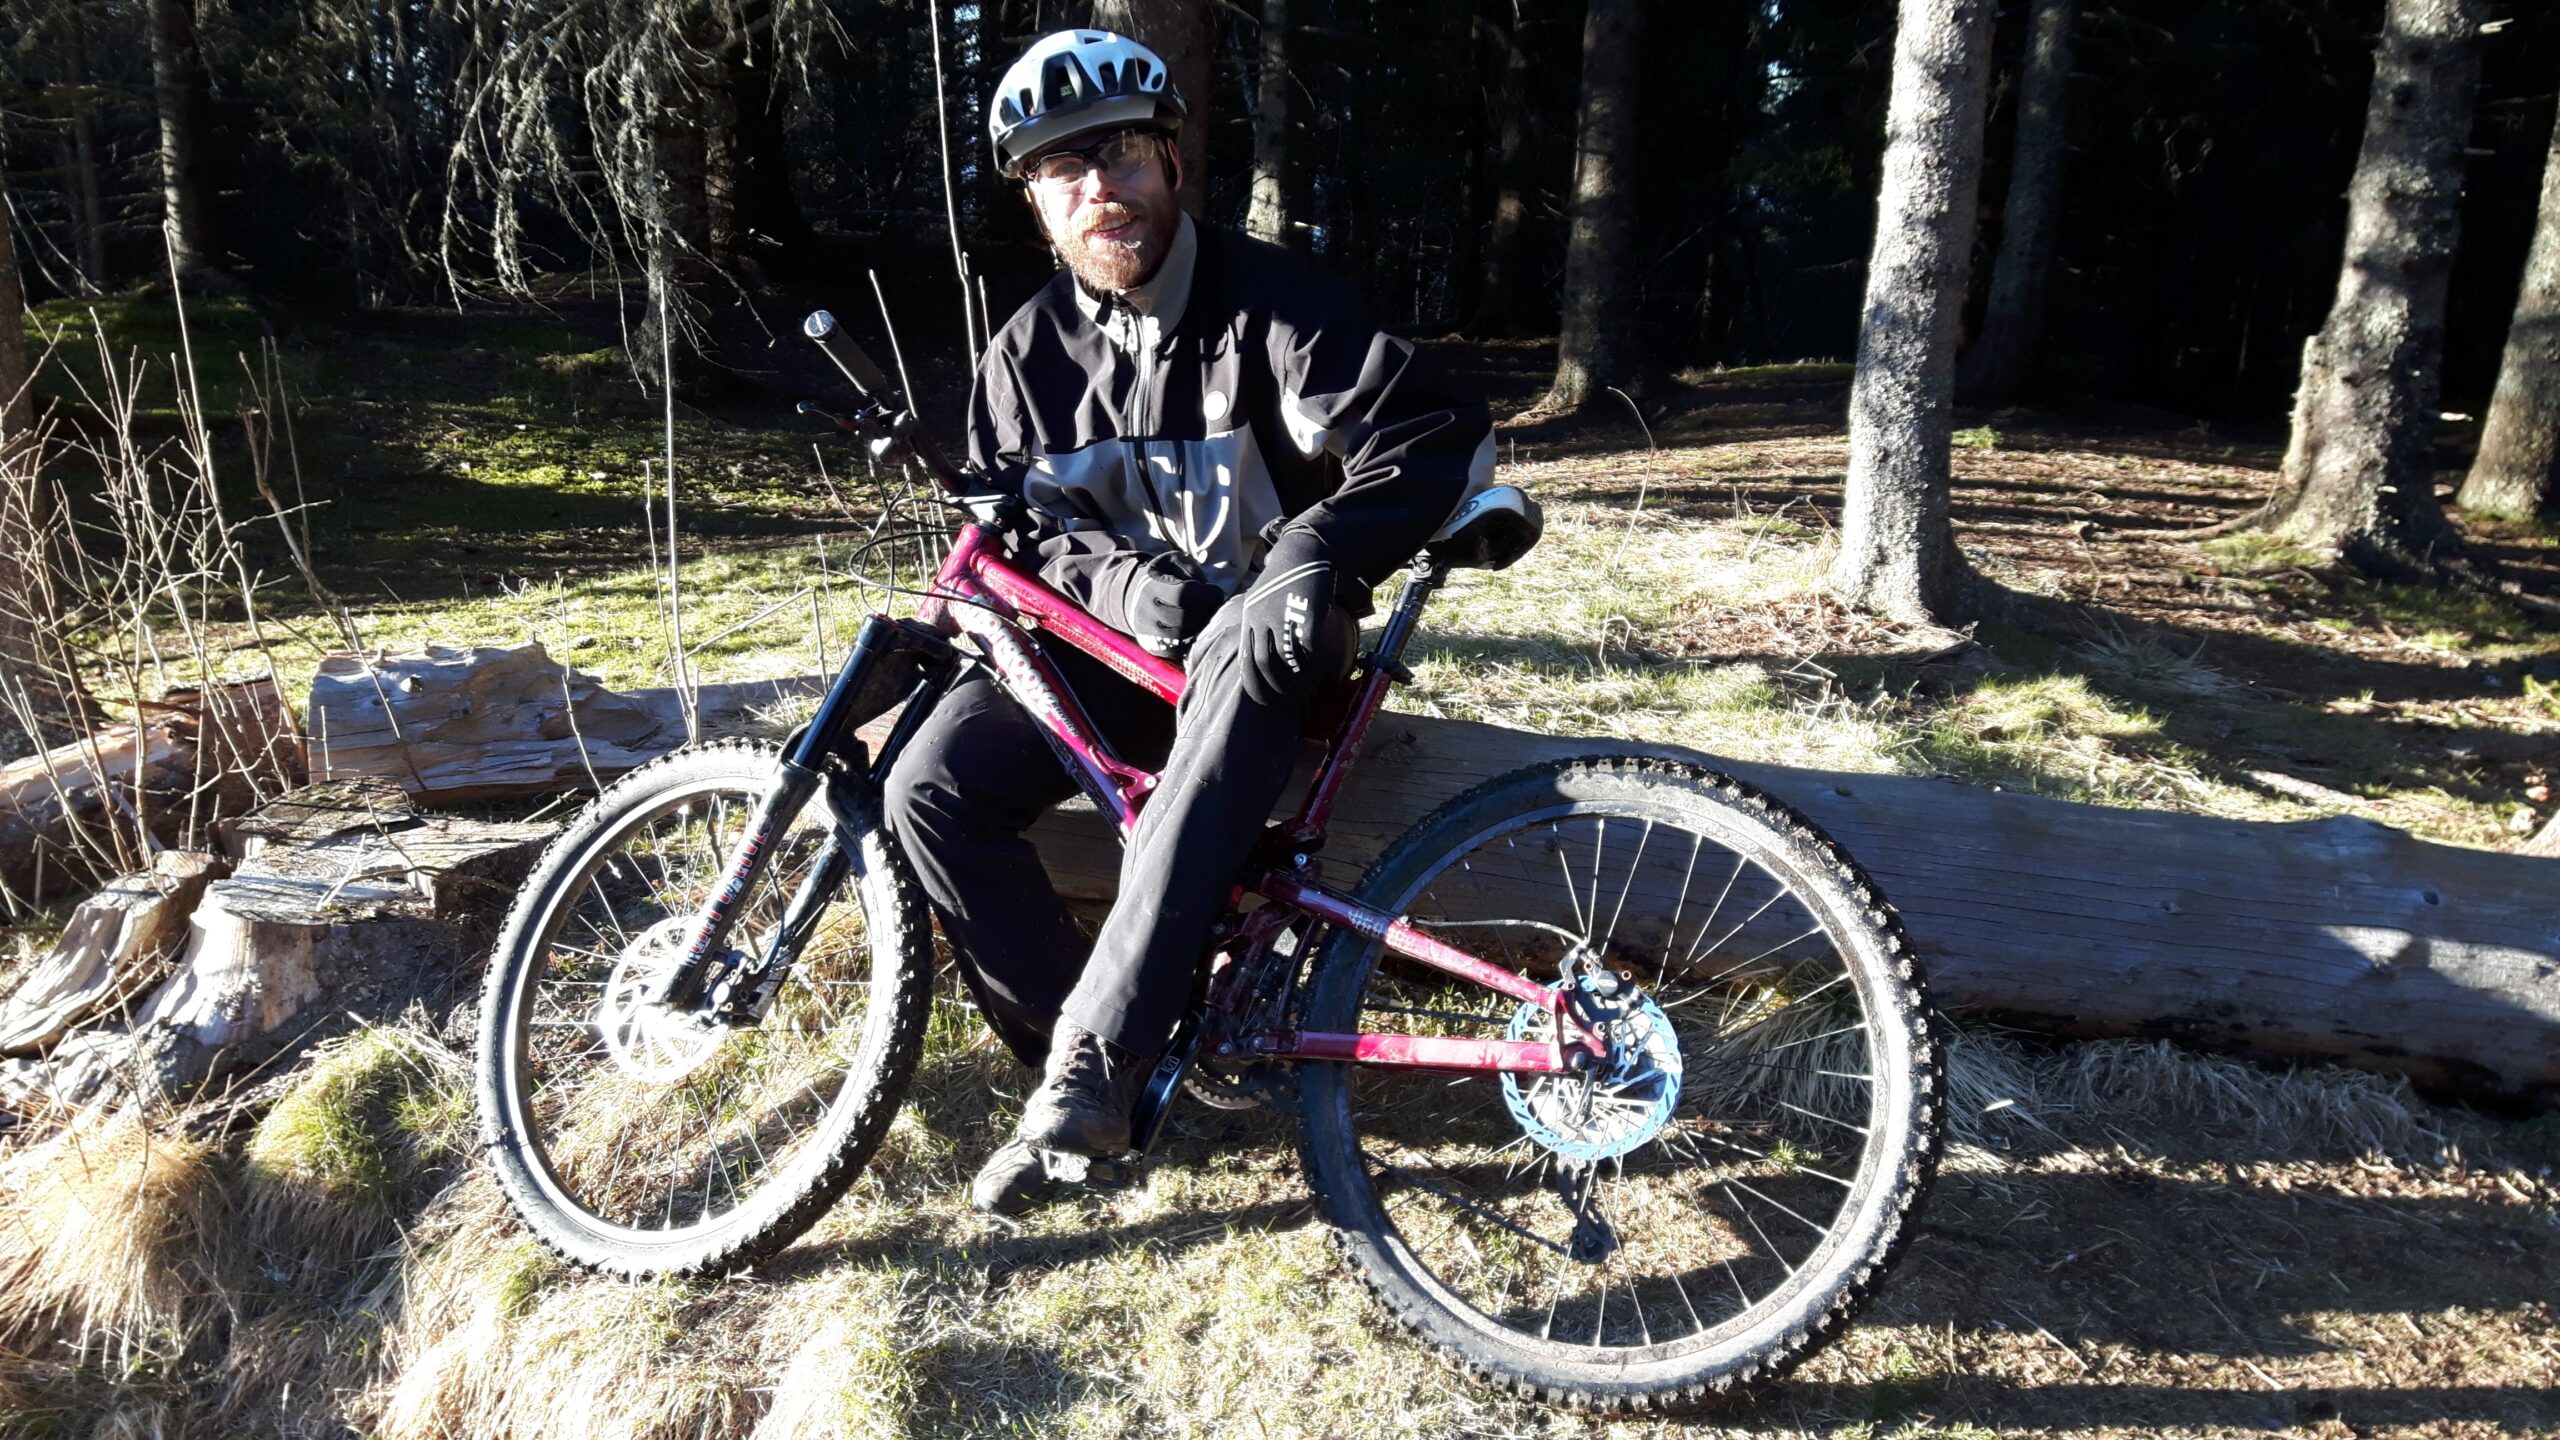 Håkon with his mountain bike